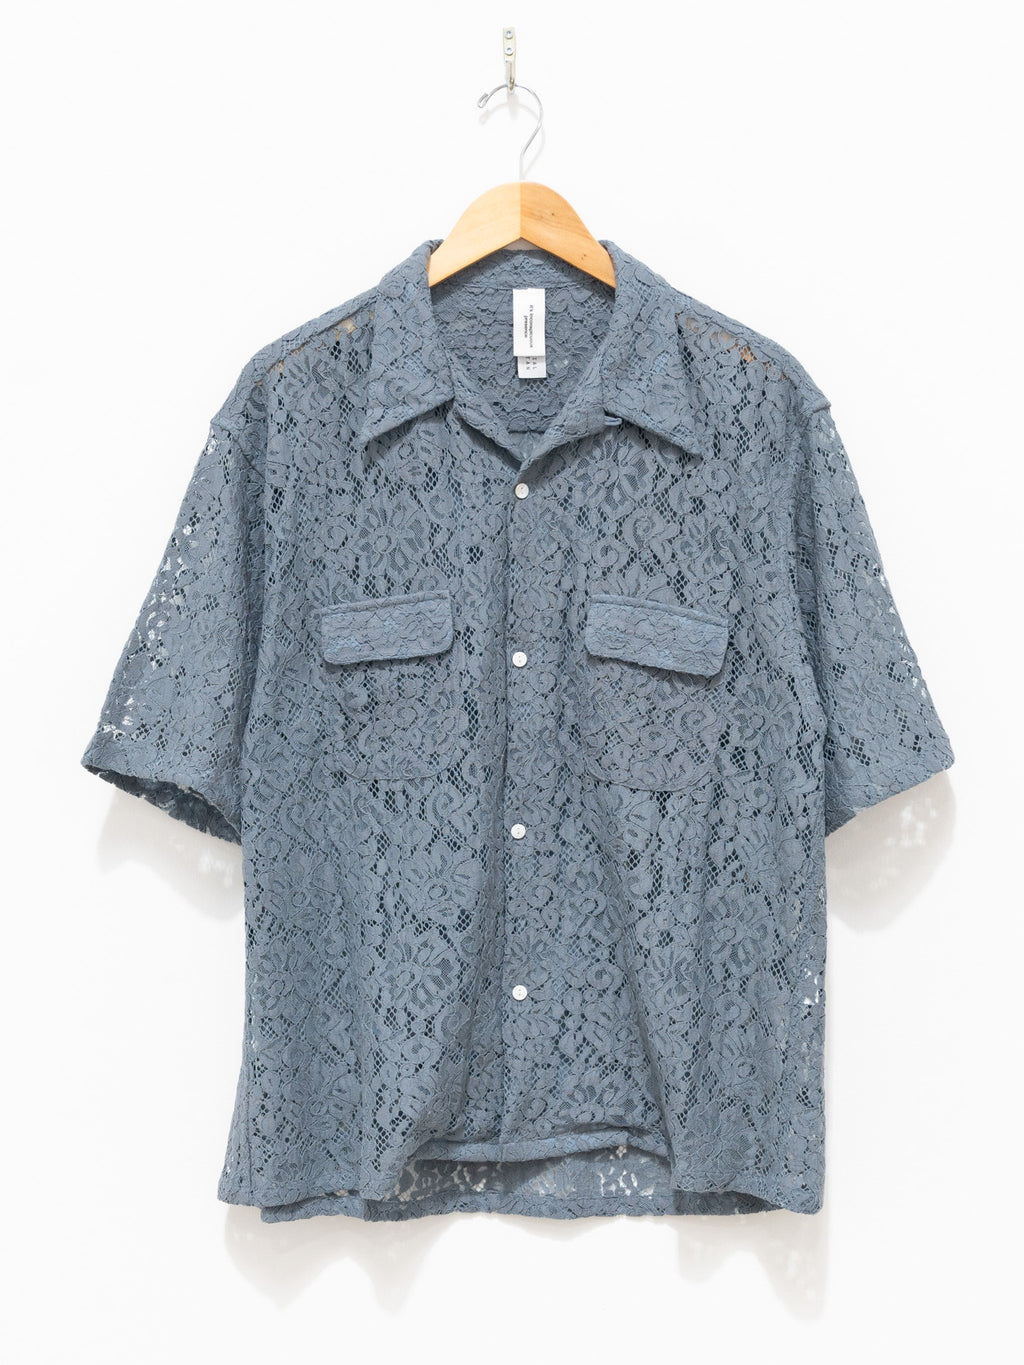 Namu Shop - Niche Open Collar S/S Shirt - Gray Lace Flower